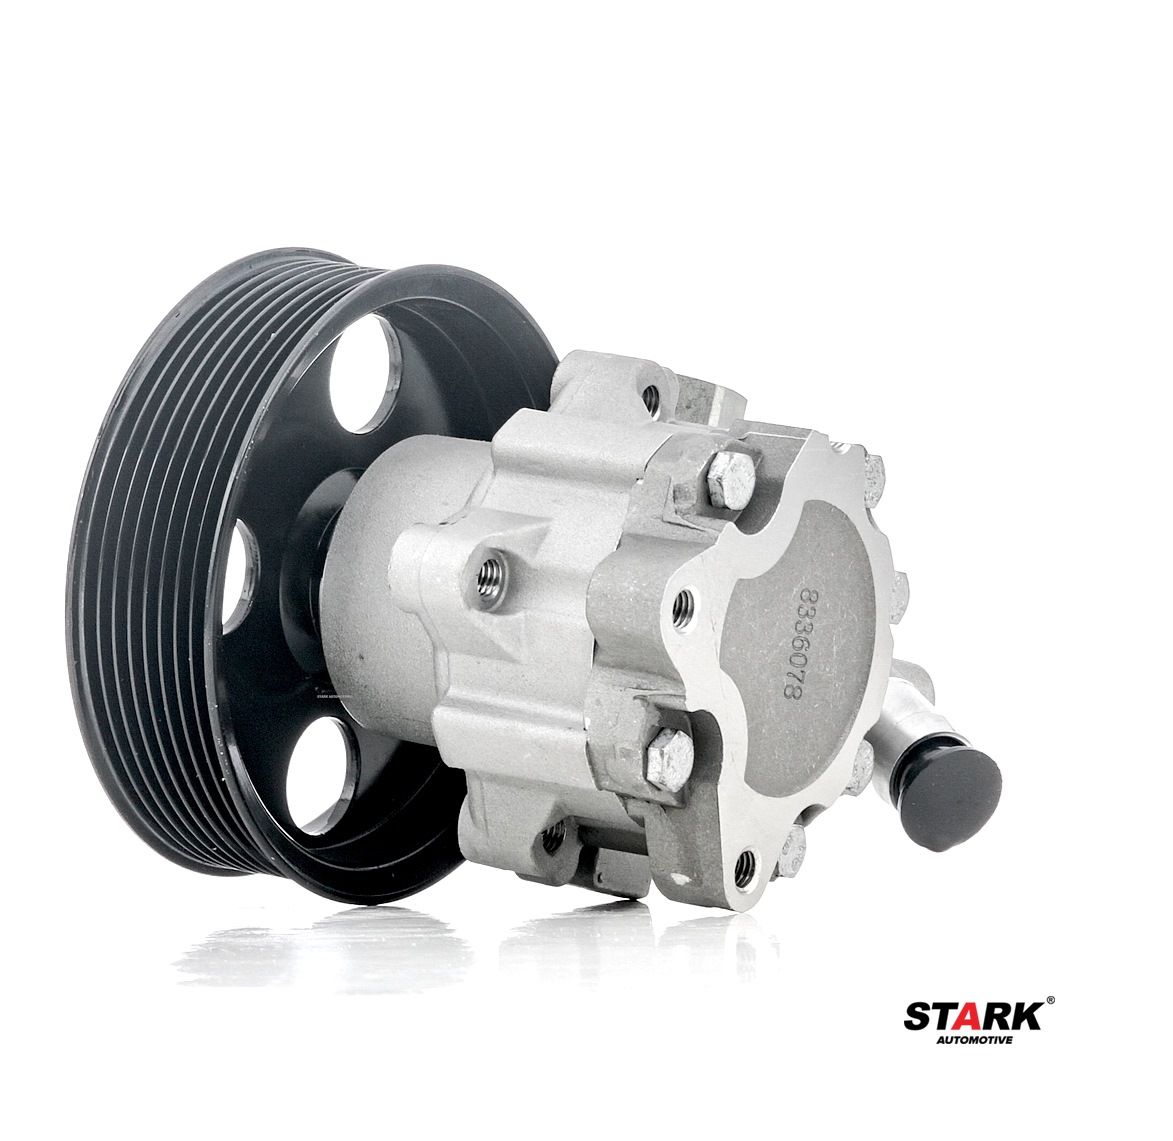 STARK SKHP-0540099 Power steering pump A 004 466 89 01